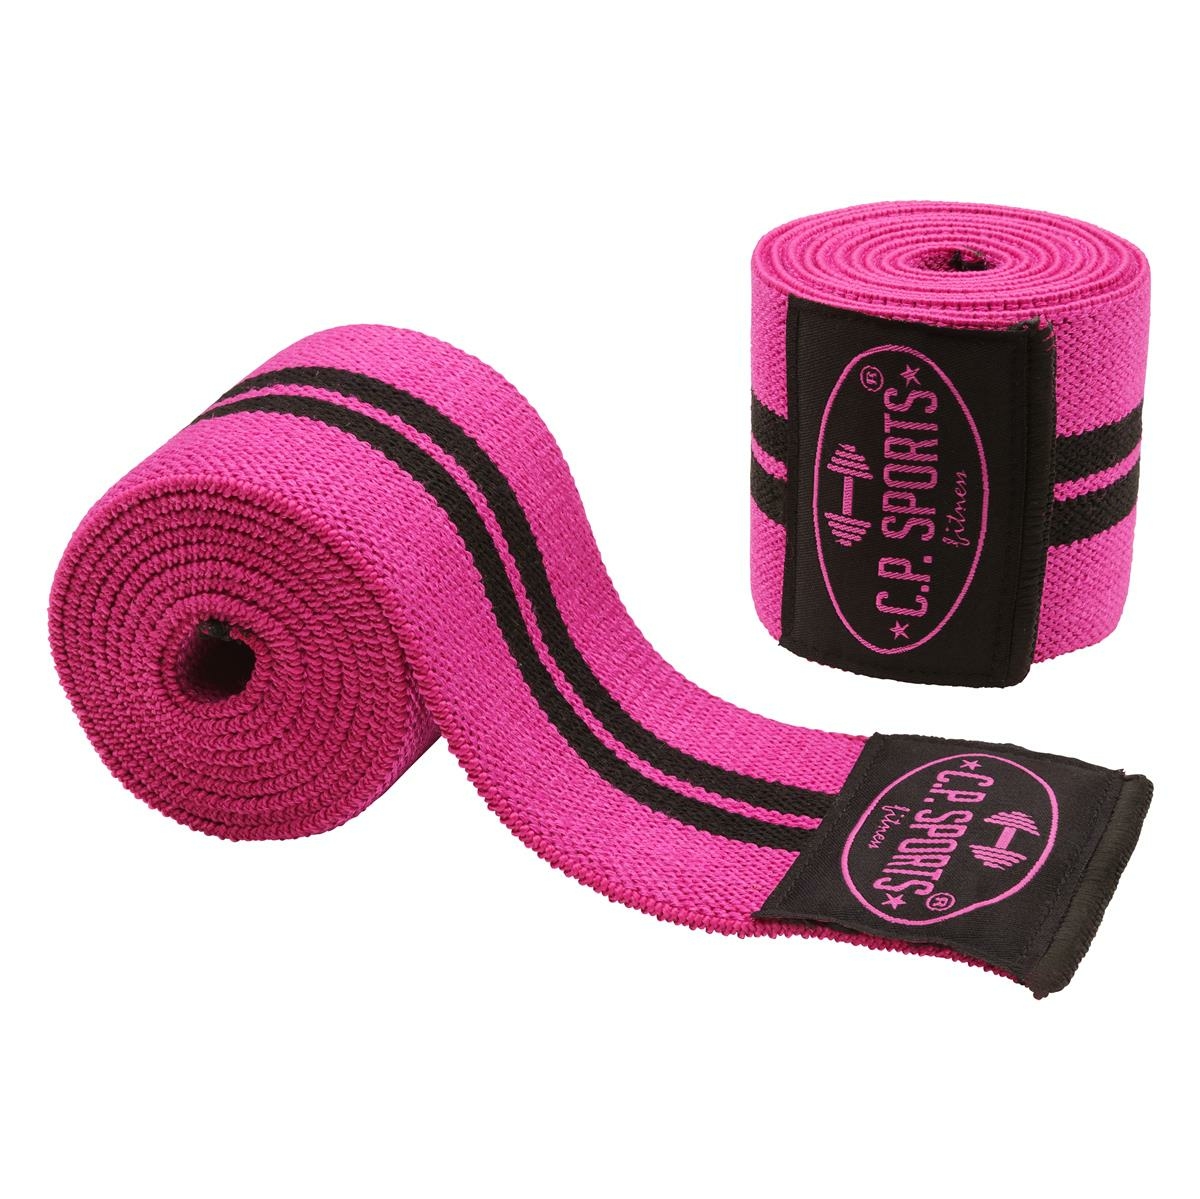 https://cp-sports.de/media/image/product/18565/lg/kniebandagen-150cm-pink-schwarz~3.jpg